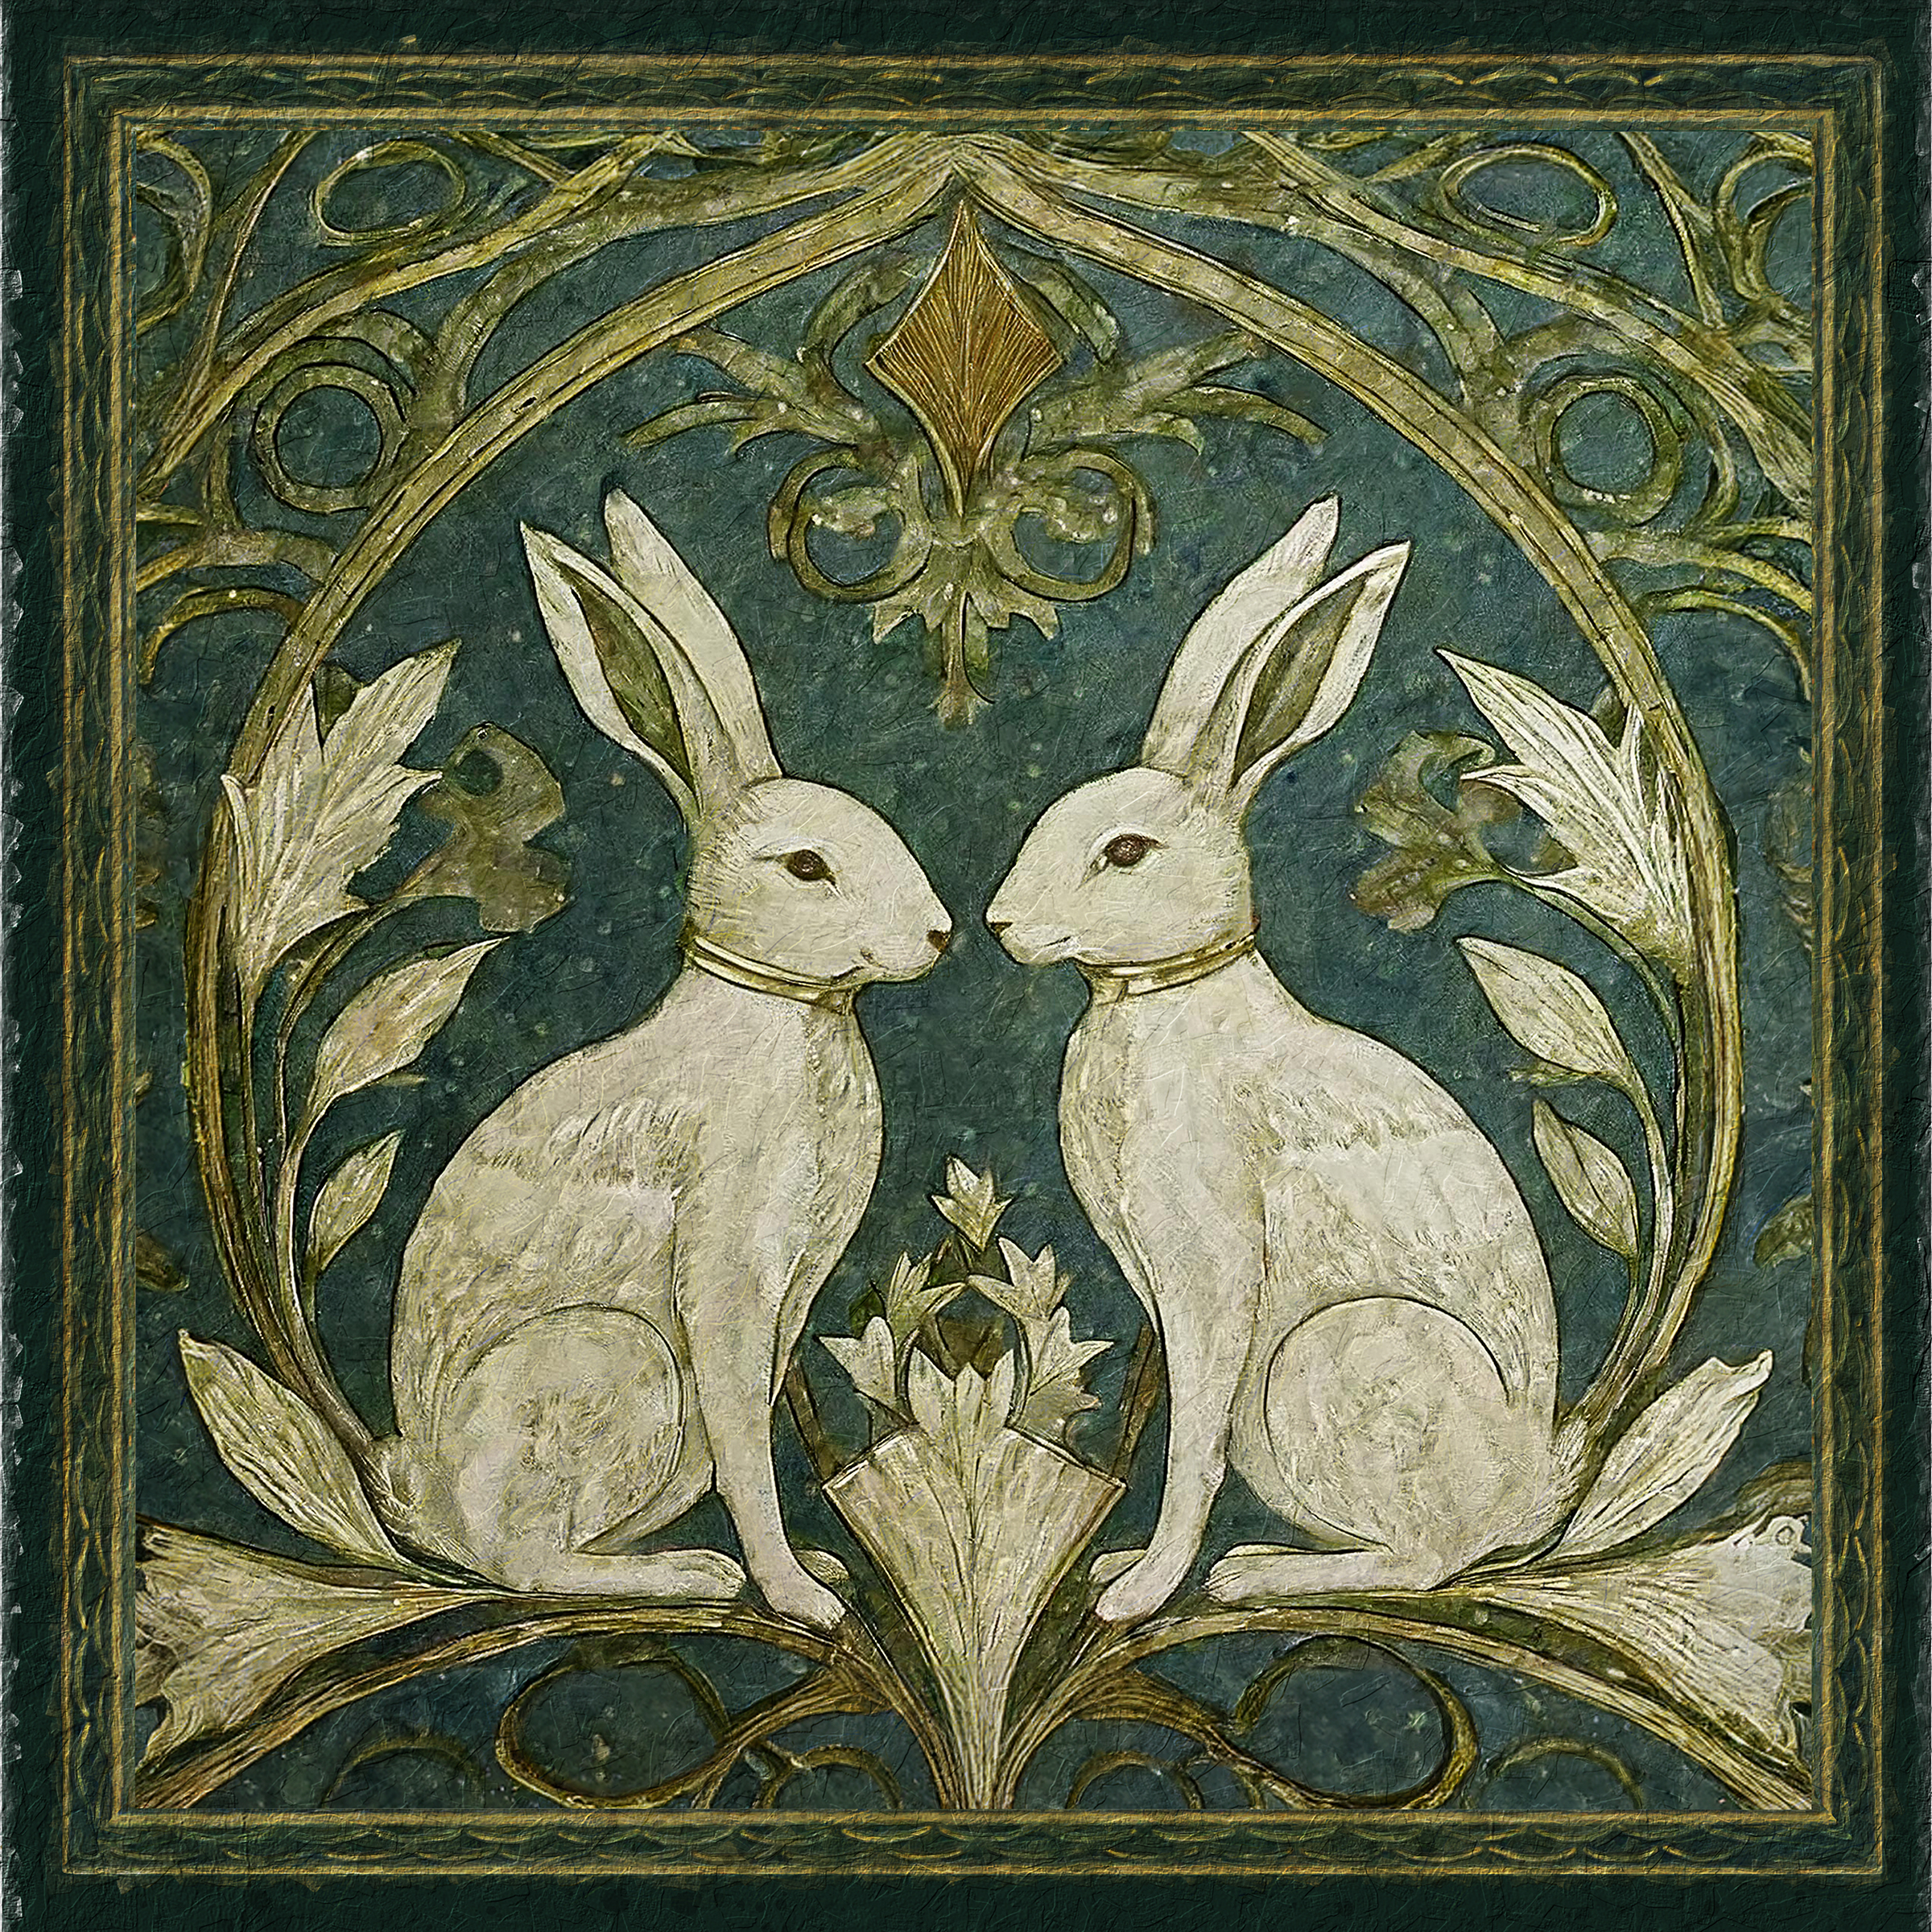 Easter Botanical/Zoological Two Rabbits Framed Print or Decorative ...